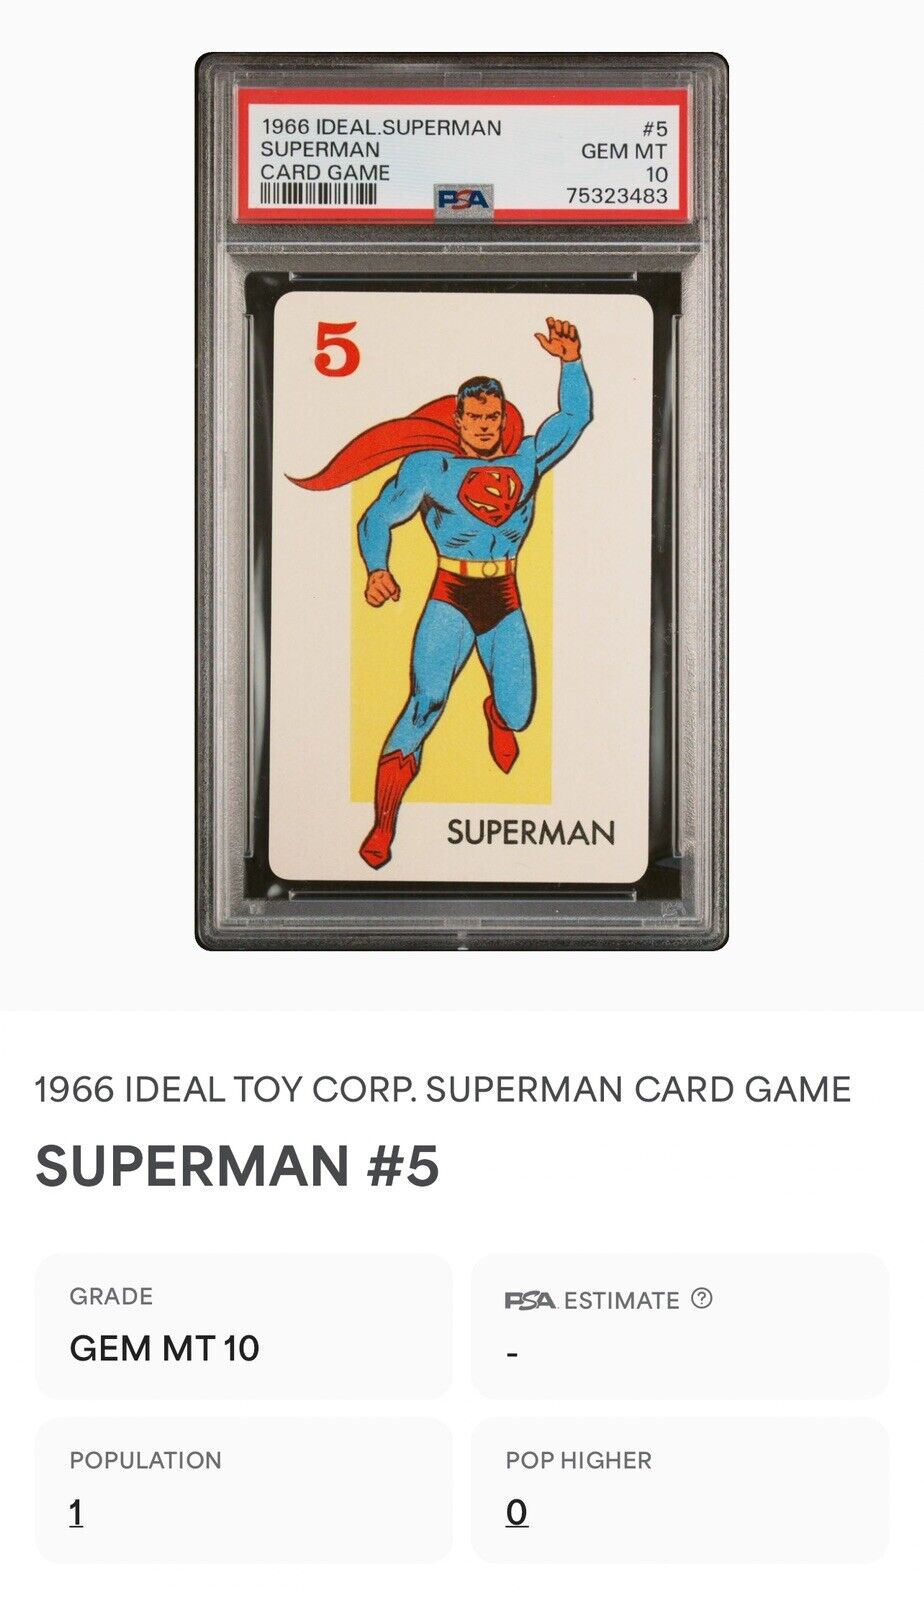 EXTREMELY RARE VINTAGE 1966 IDEAL SUPERMAN CARD GAME ROOKIE PSA 10 GEM — POP 1